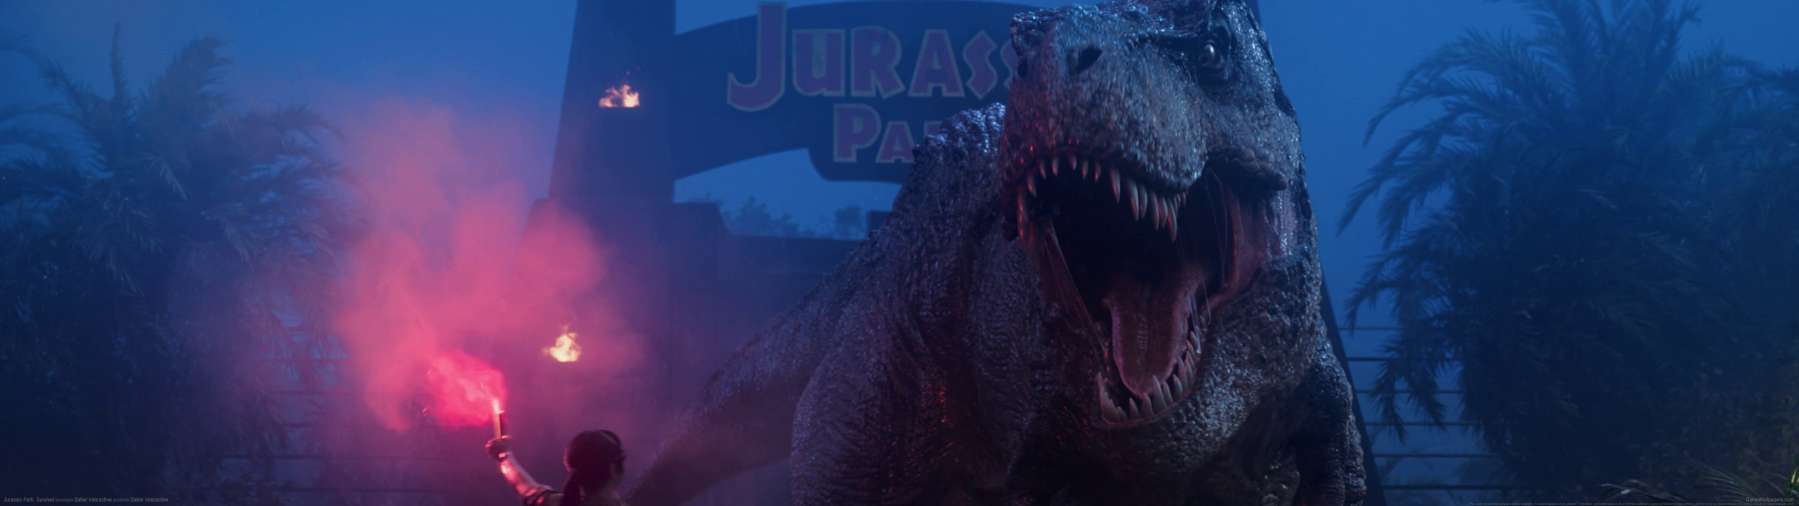 Jurassic Park: Survival wallpaper or background